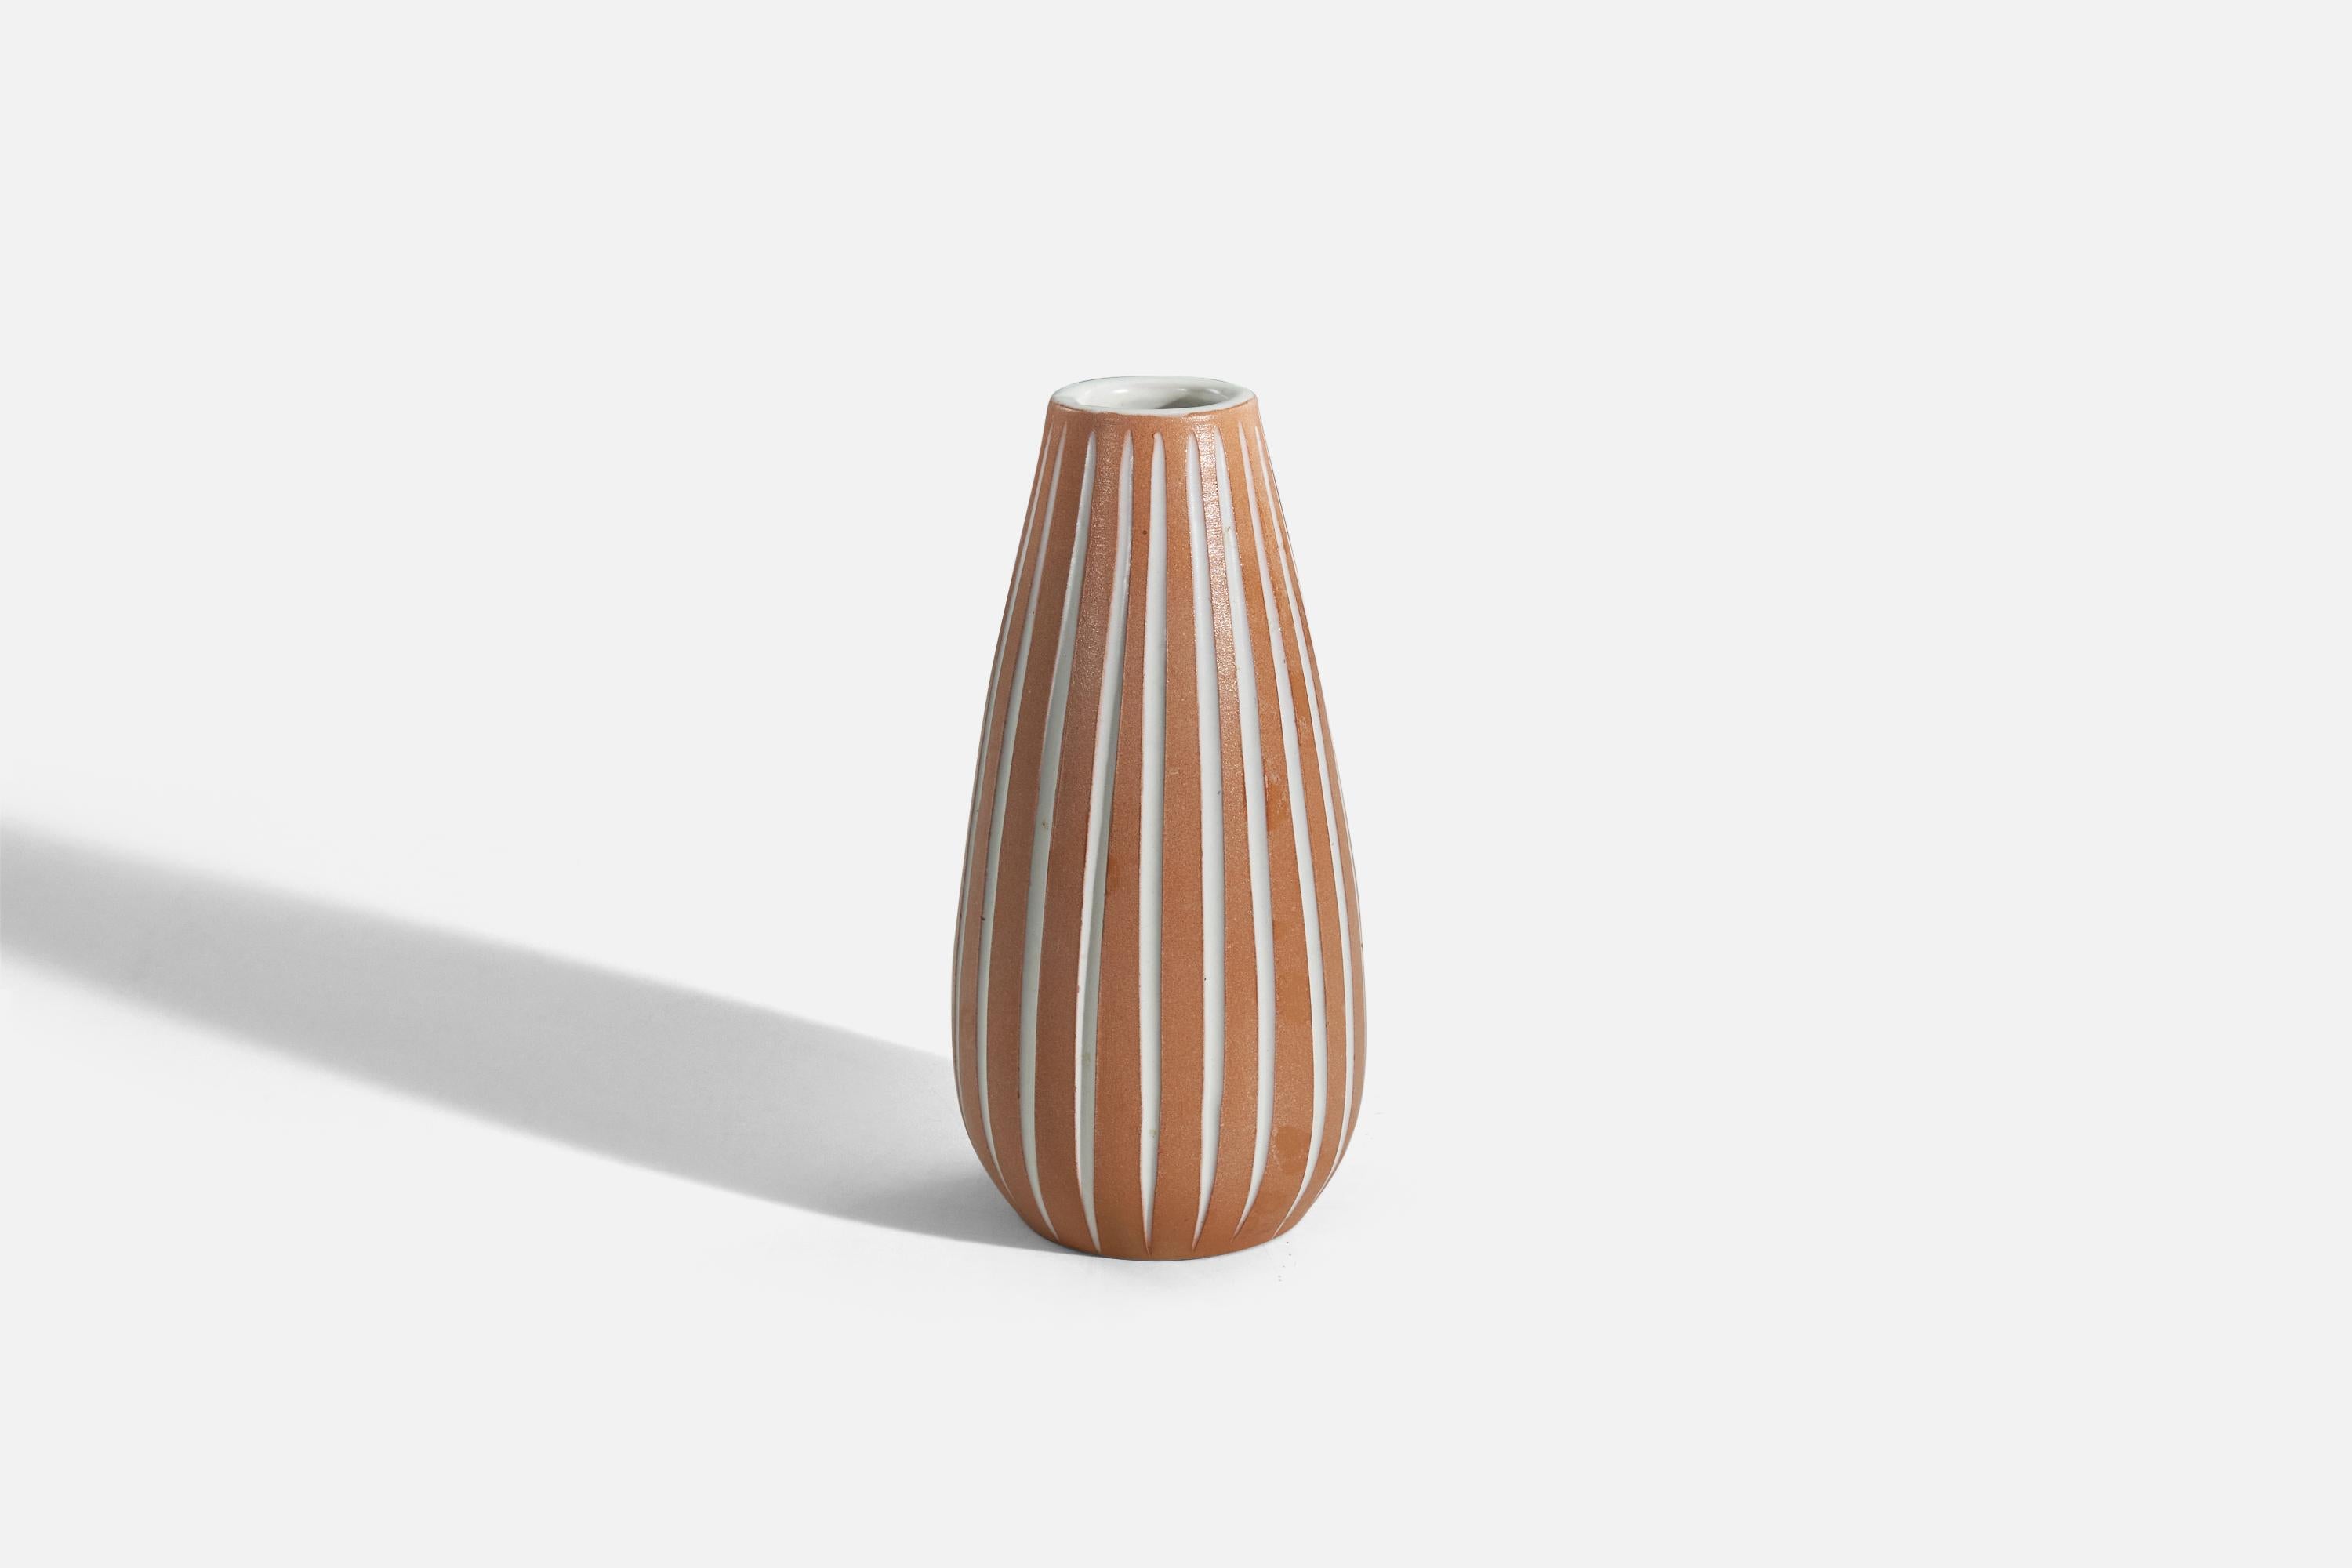 An orange and white, glazed earthenware vase, 